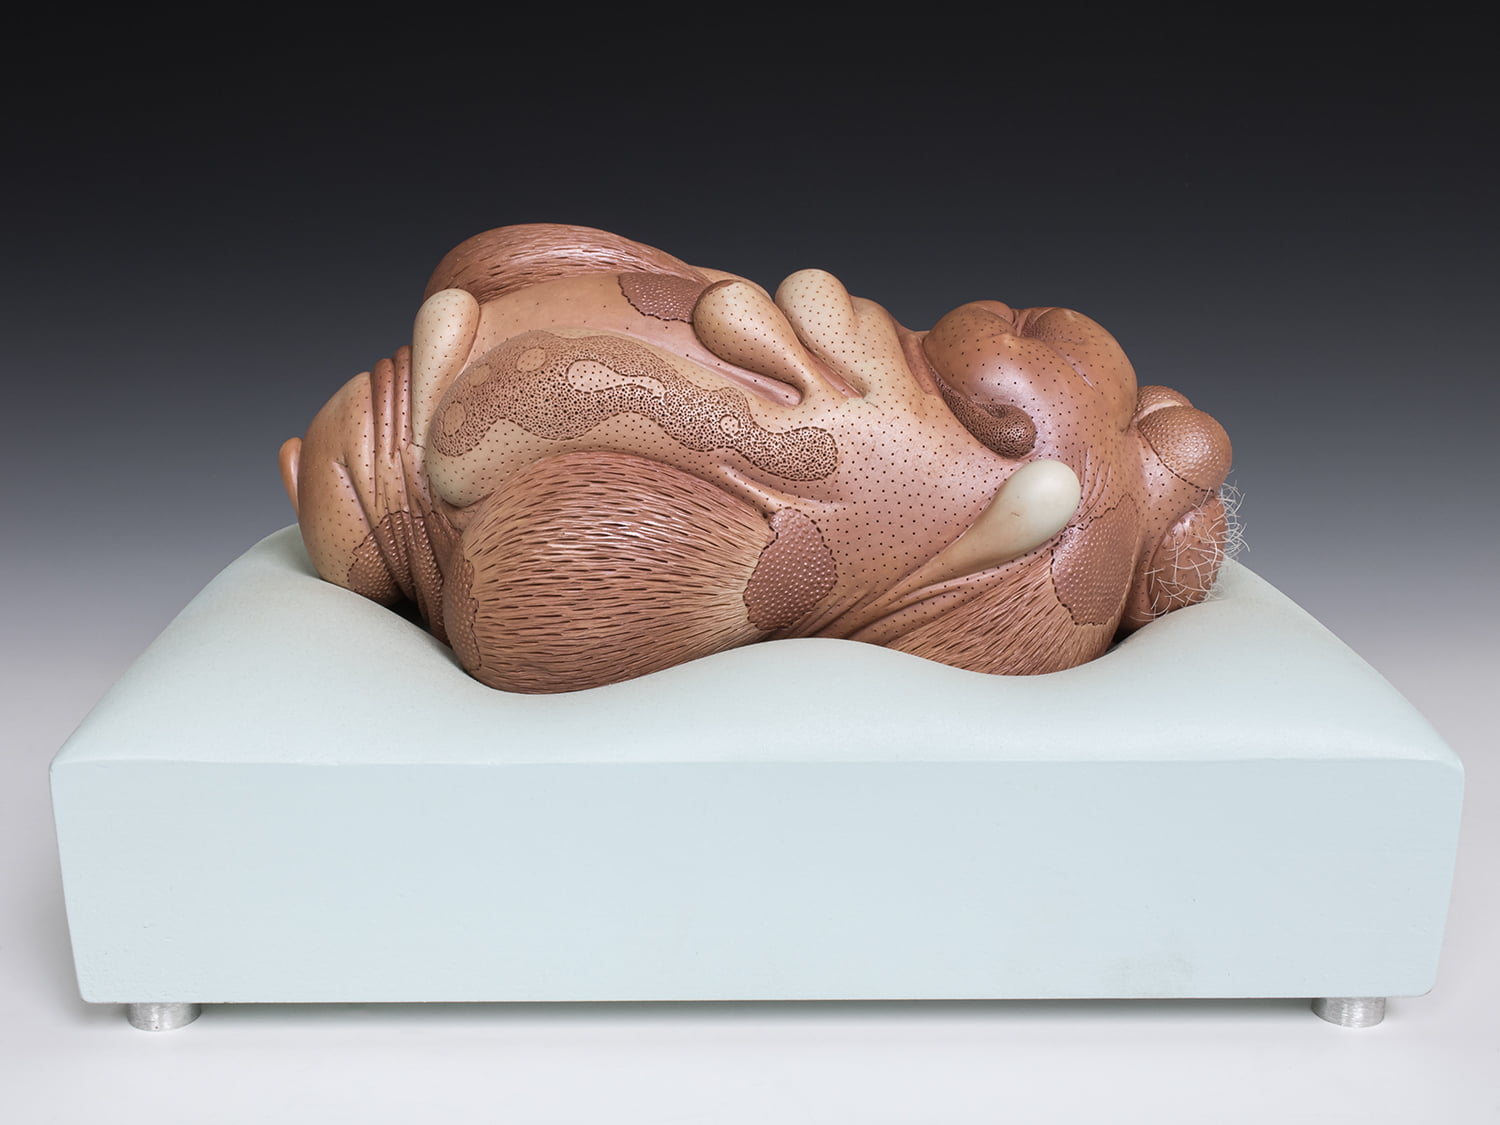 Jason Briggs "Blush" (full view). porcelain, hair, and mixed media sculpture ceramics.